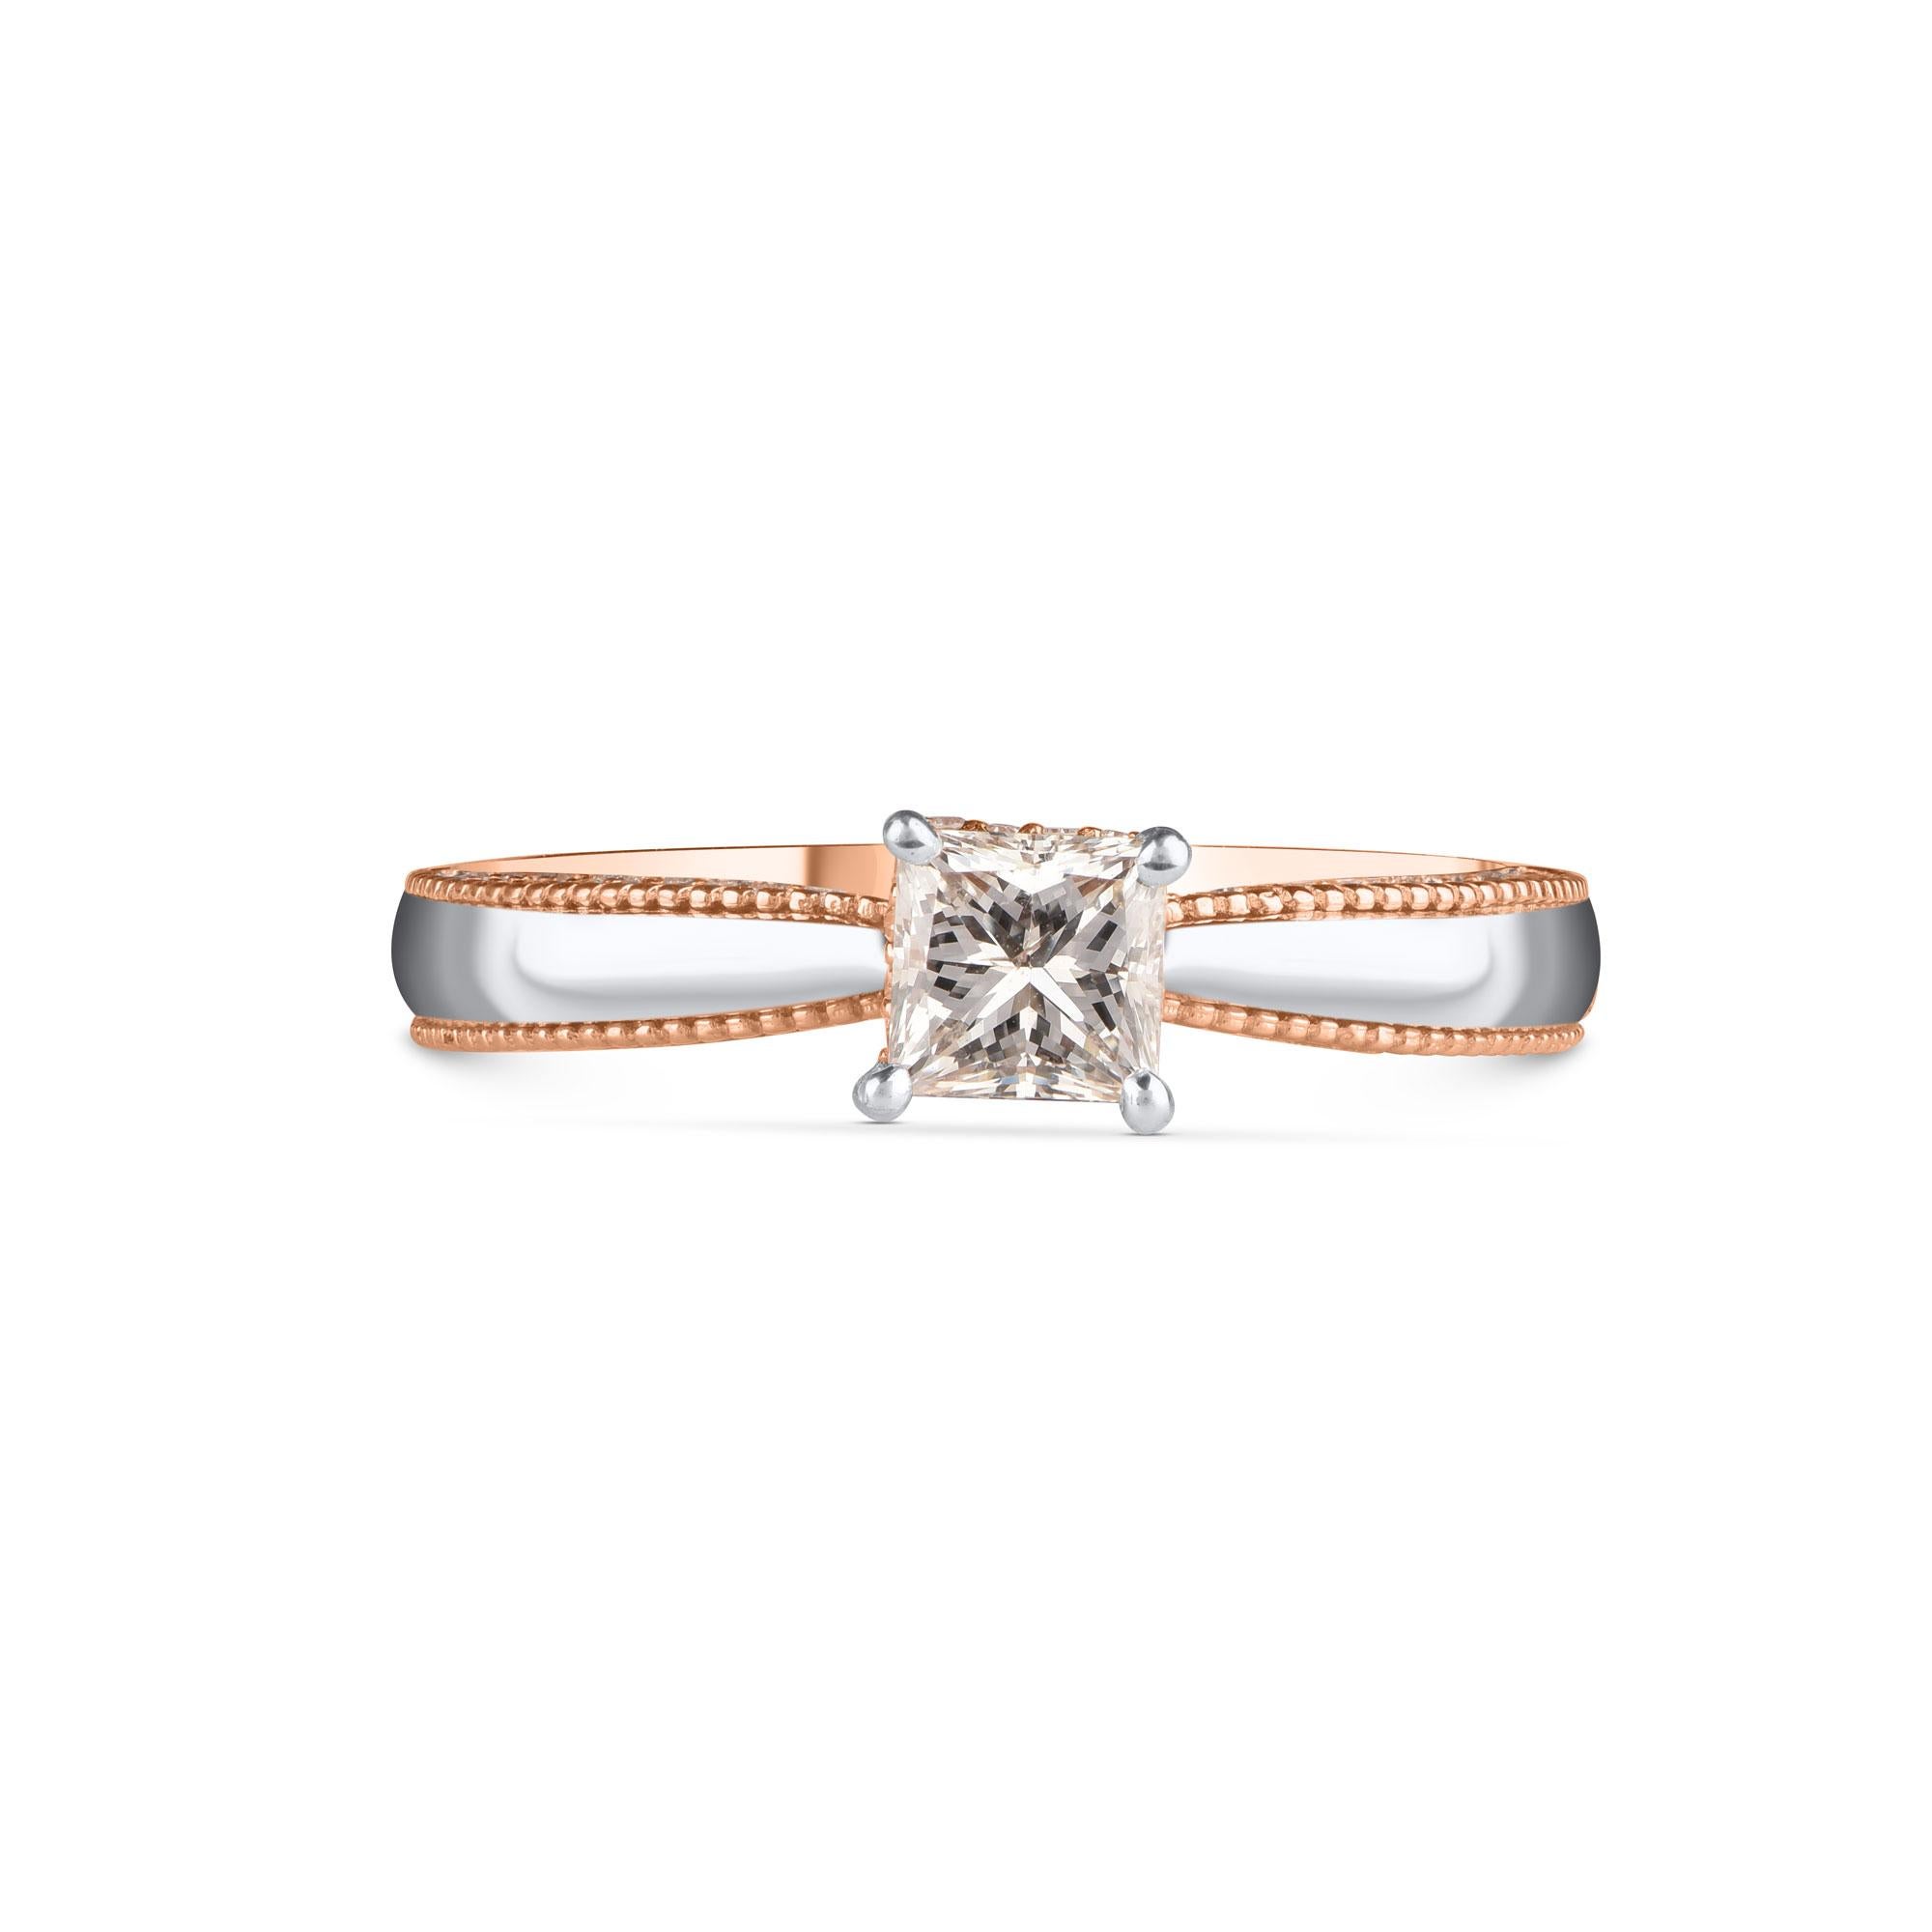 0.75 carat diamond engagement ring